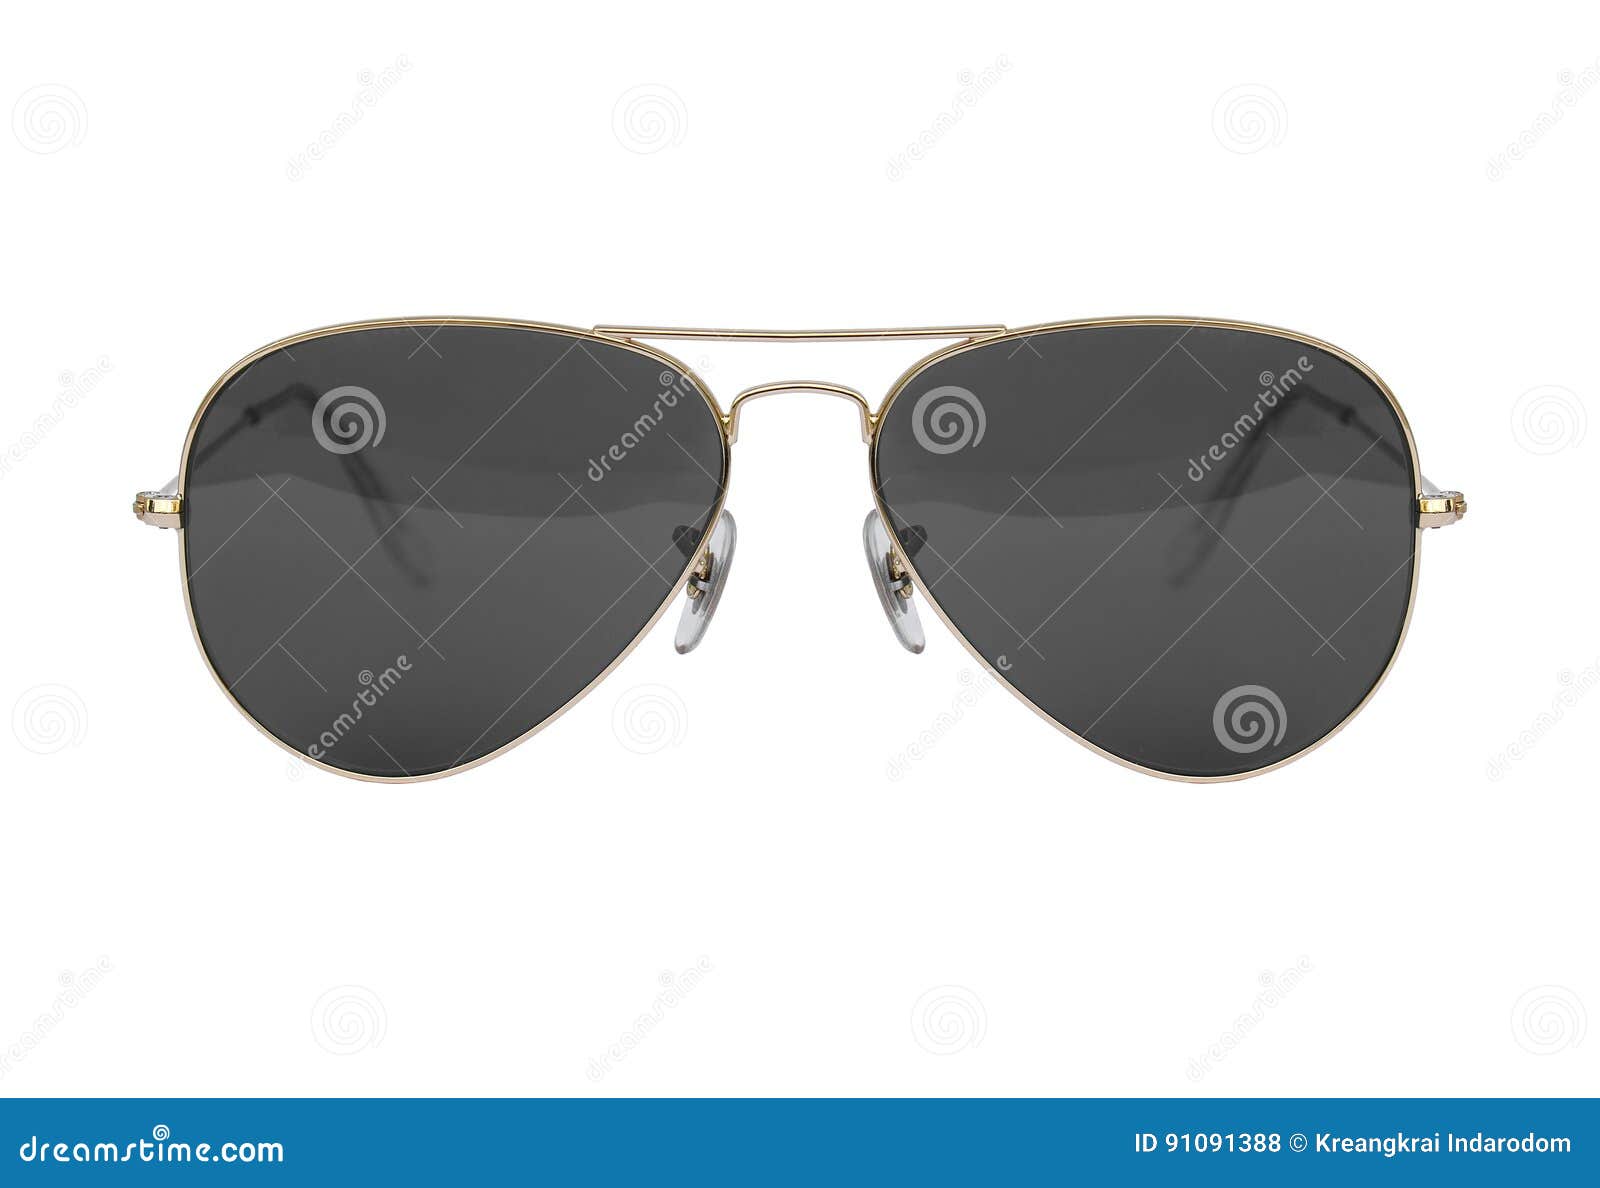 sunglasses, aviator style.